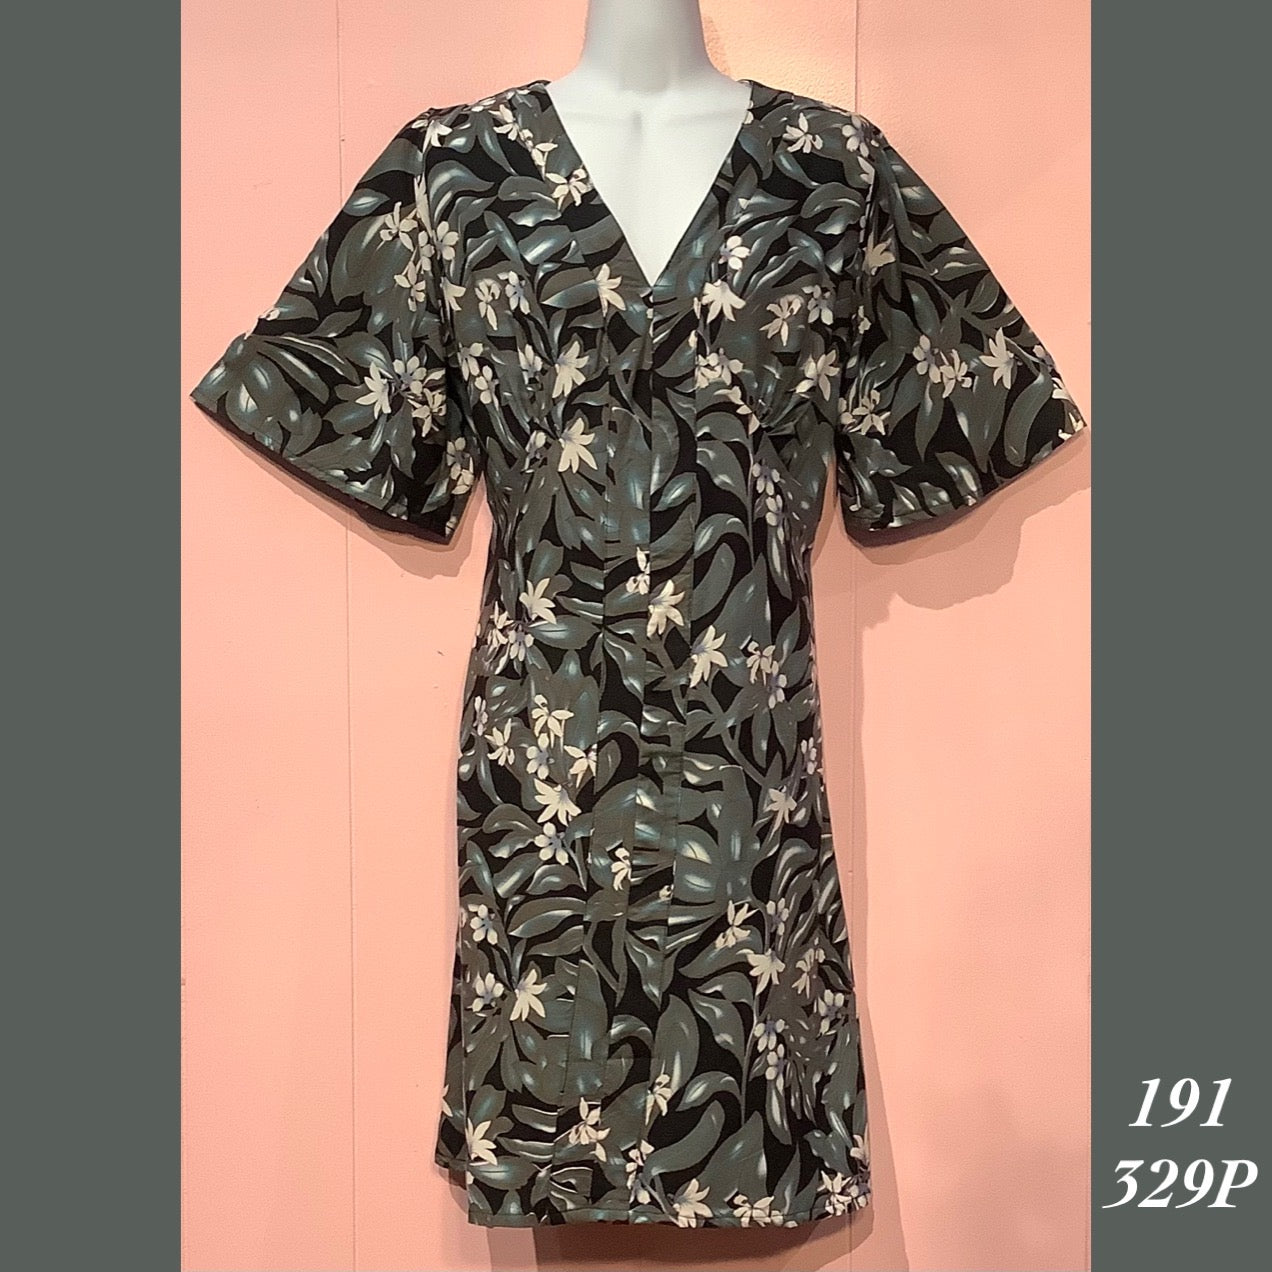 191 - 329P , Soft sleeved dress